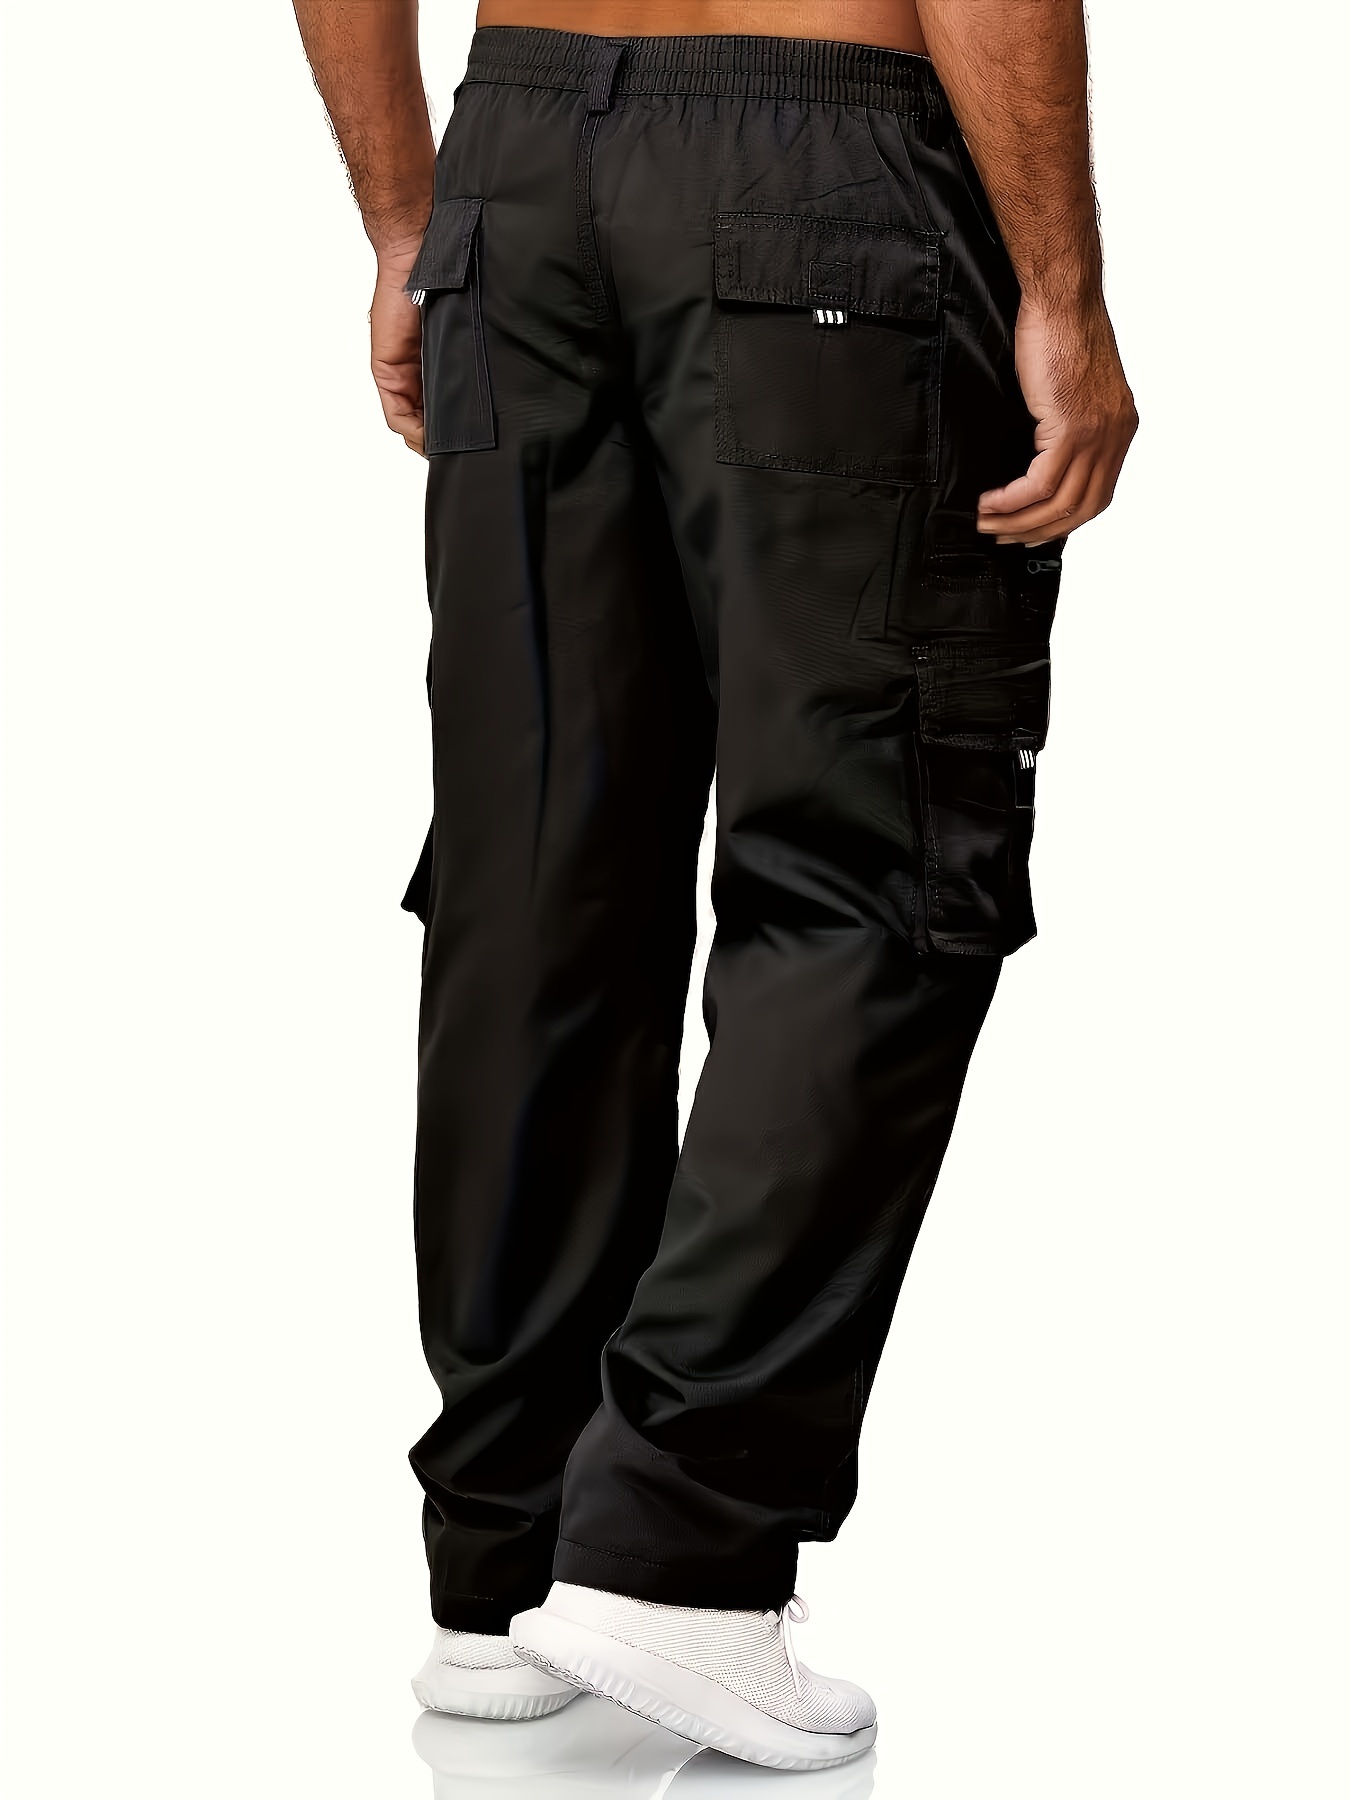 Stretch Cargo Pants for Women Solid Elastic Waist Denim Work Pants Multi  Pockets Comfy Streetwear Jogger Pants Loose Pants(L,Army Green) 